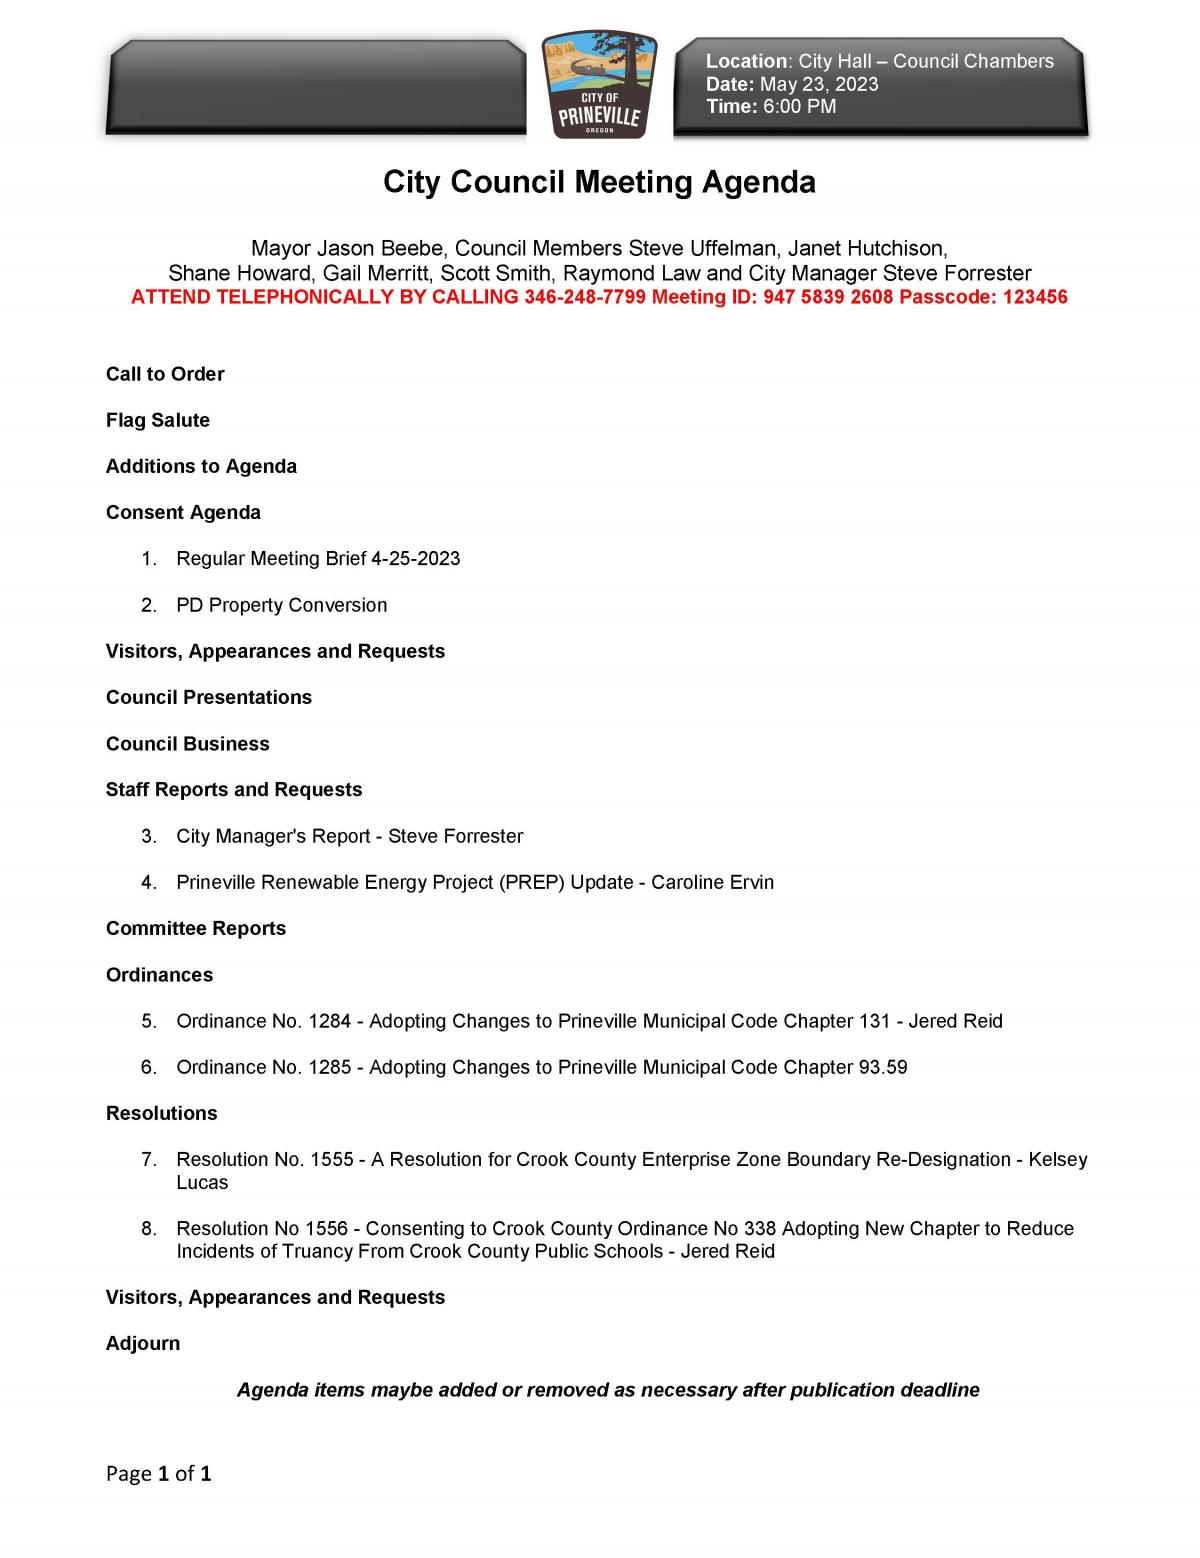 Council Agenda 5-23-2023